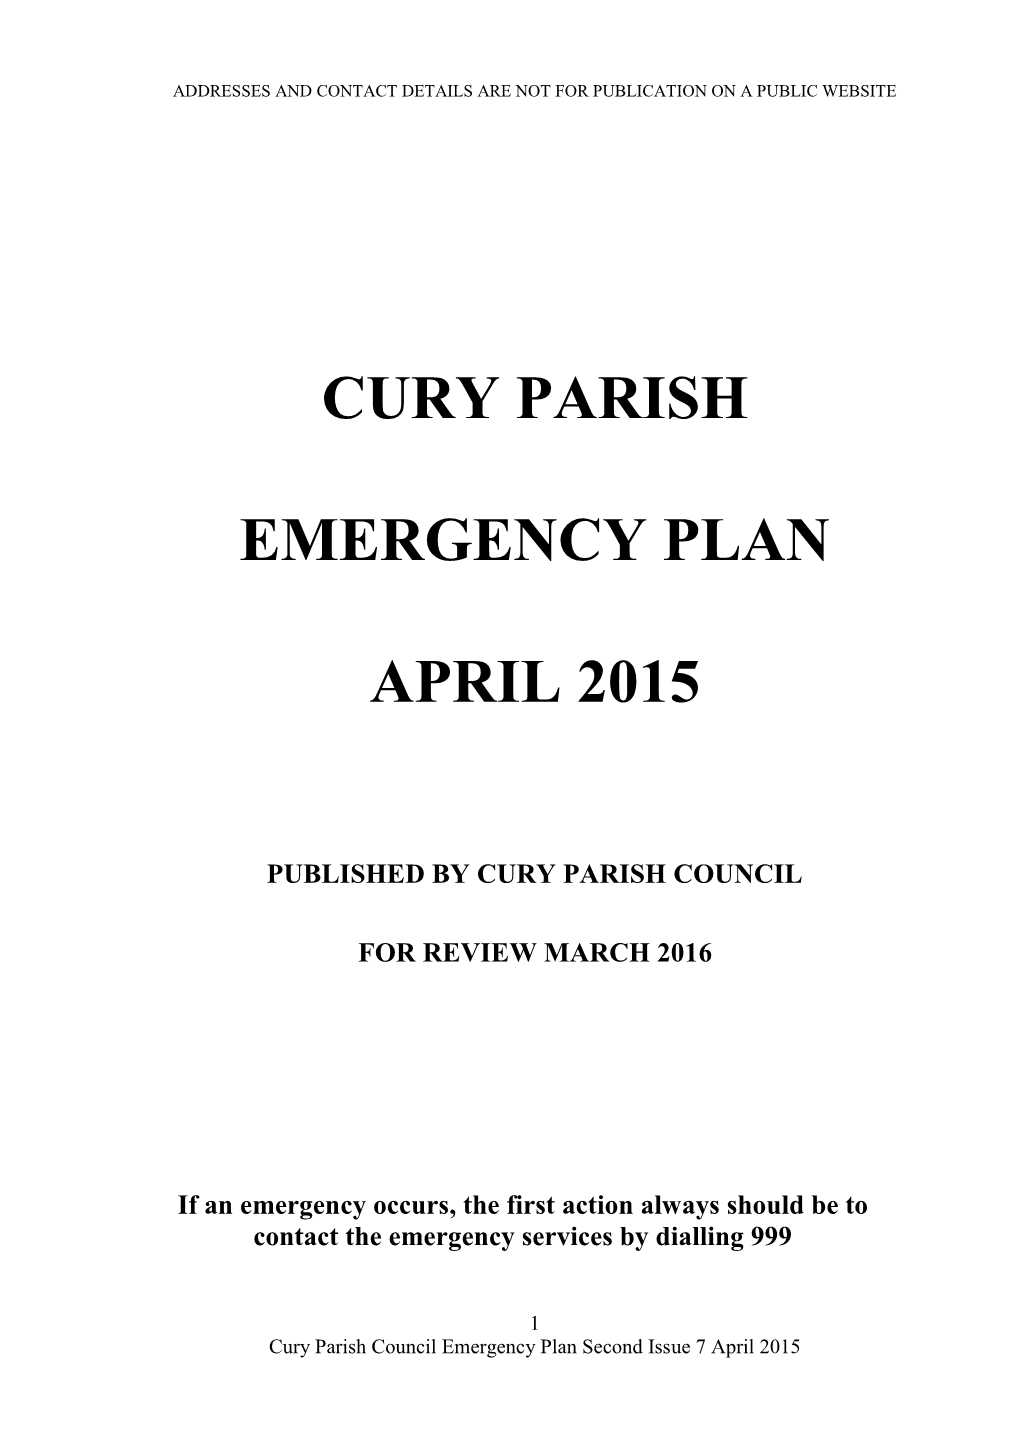 Cury Parish Emergency Plan April 2015